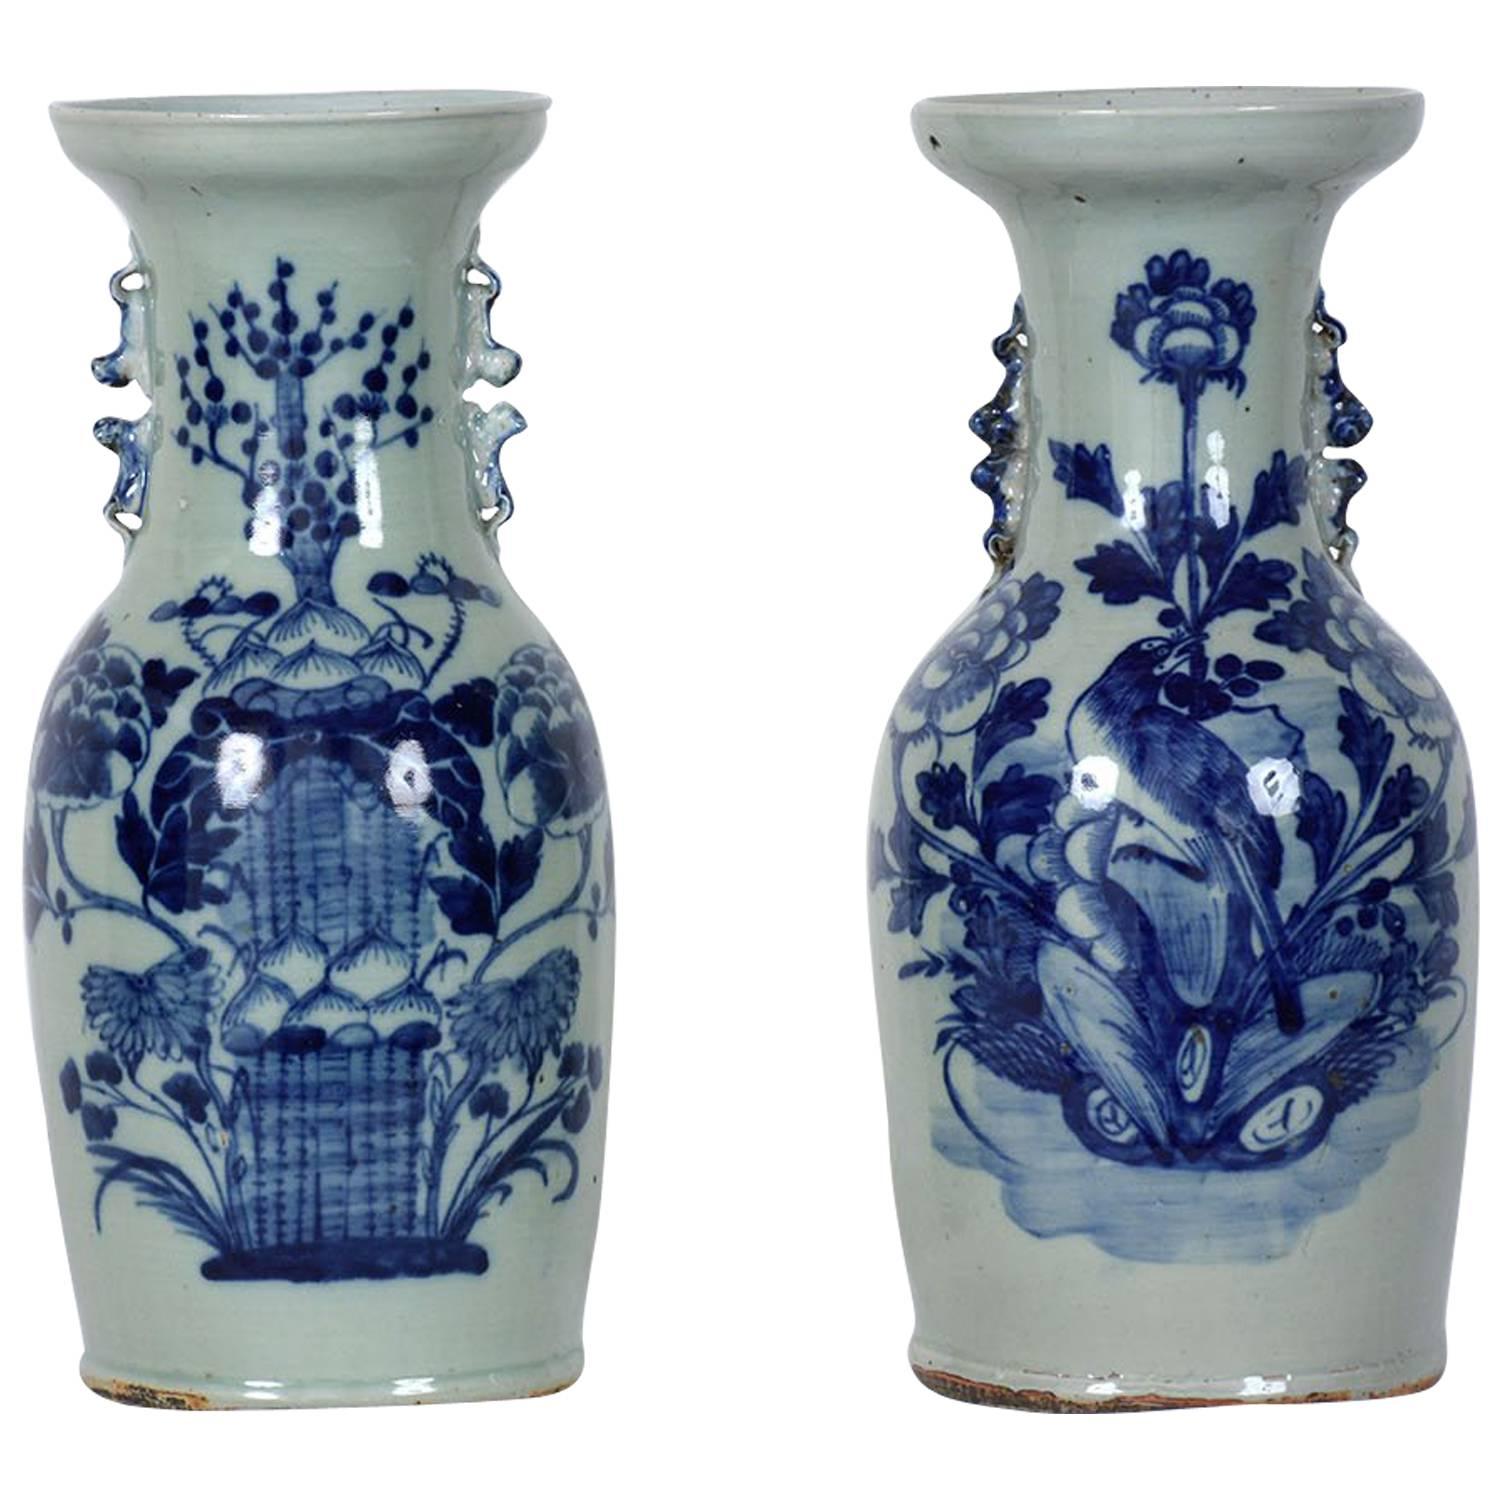 Pair of Chinese Blue and White Ceramic Vases